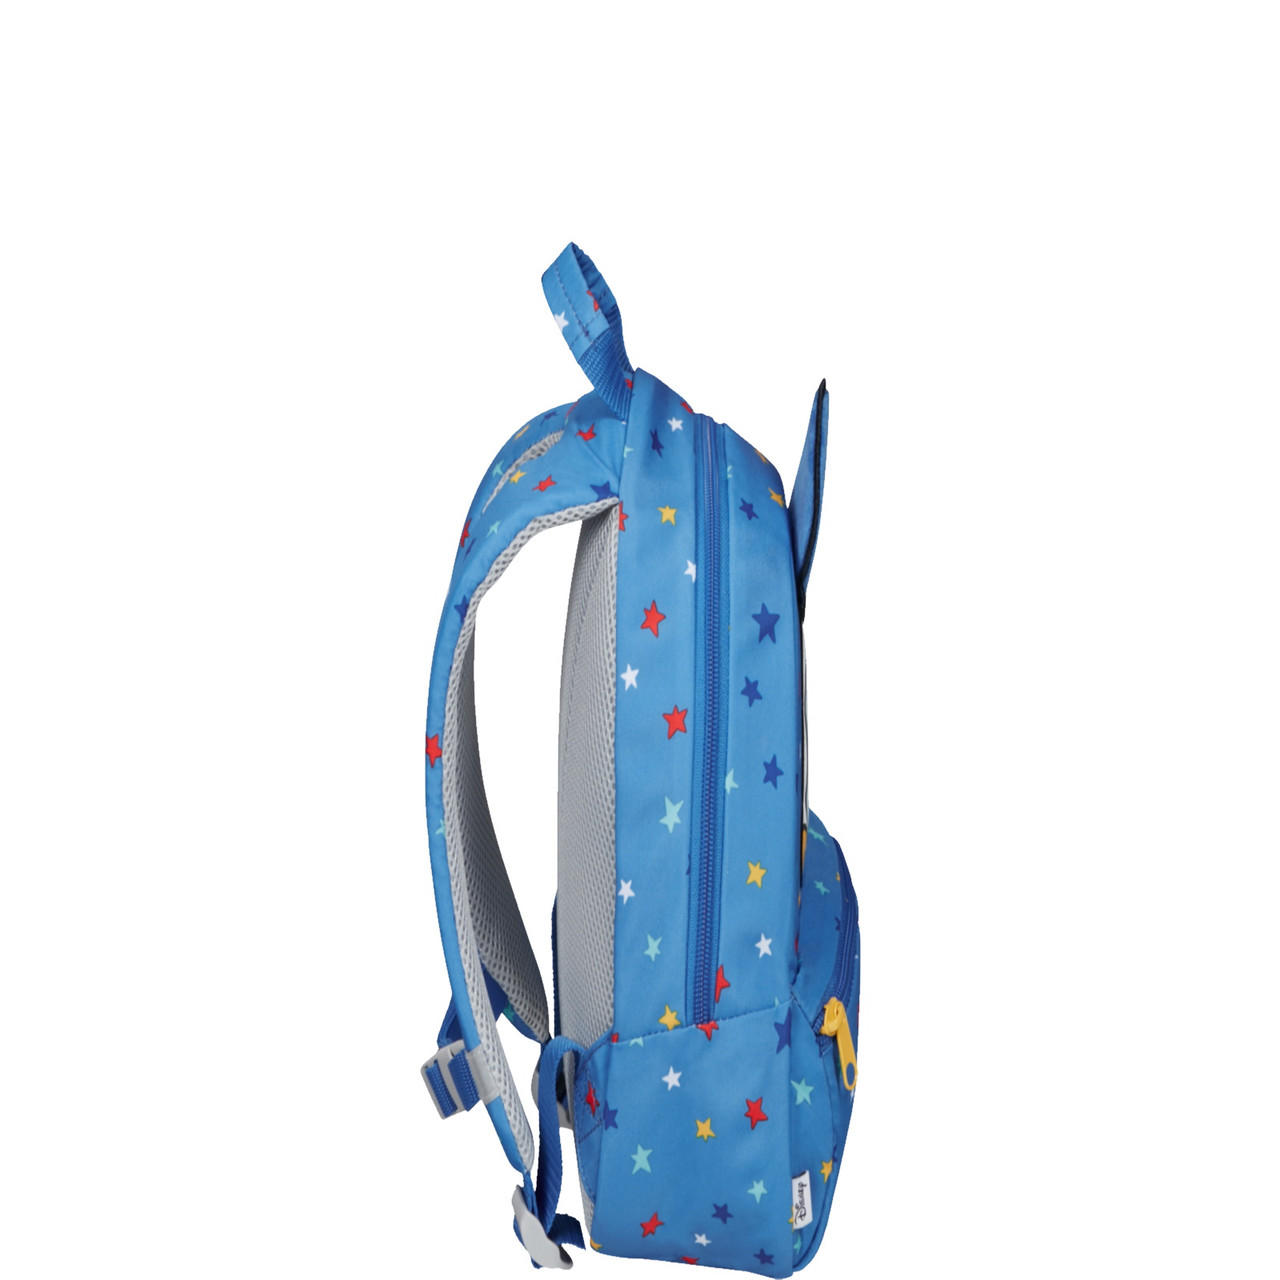 Luggage Samsonite Ultimate Backpack Donald Disney Superstore at Stars 2.0 S